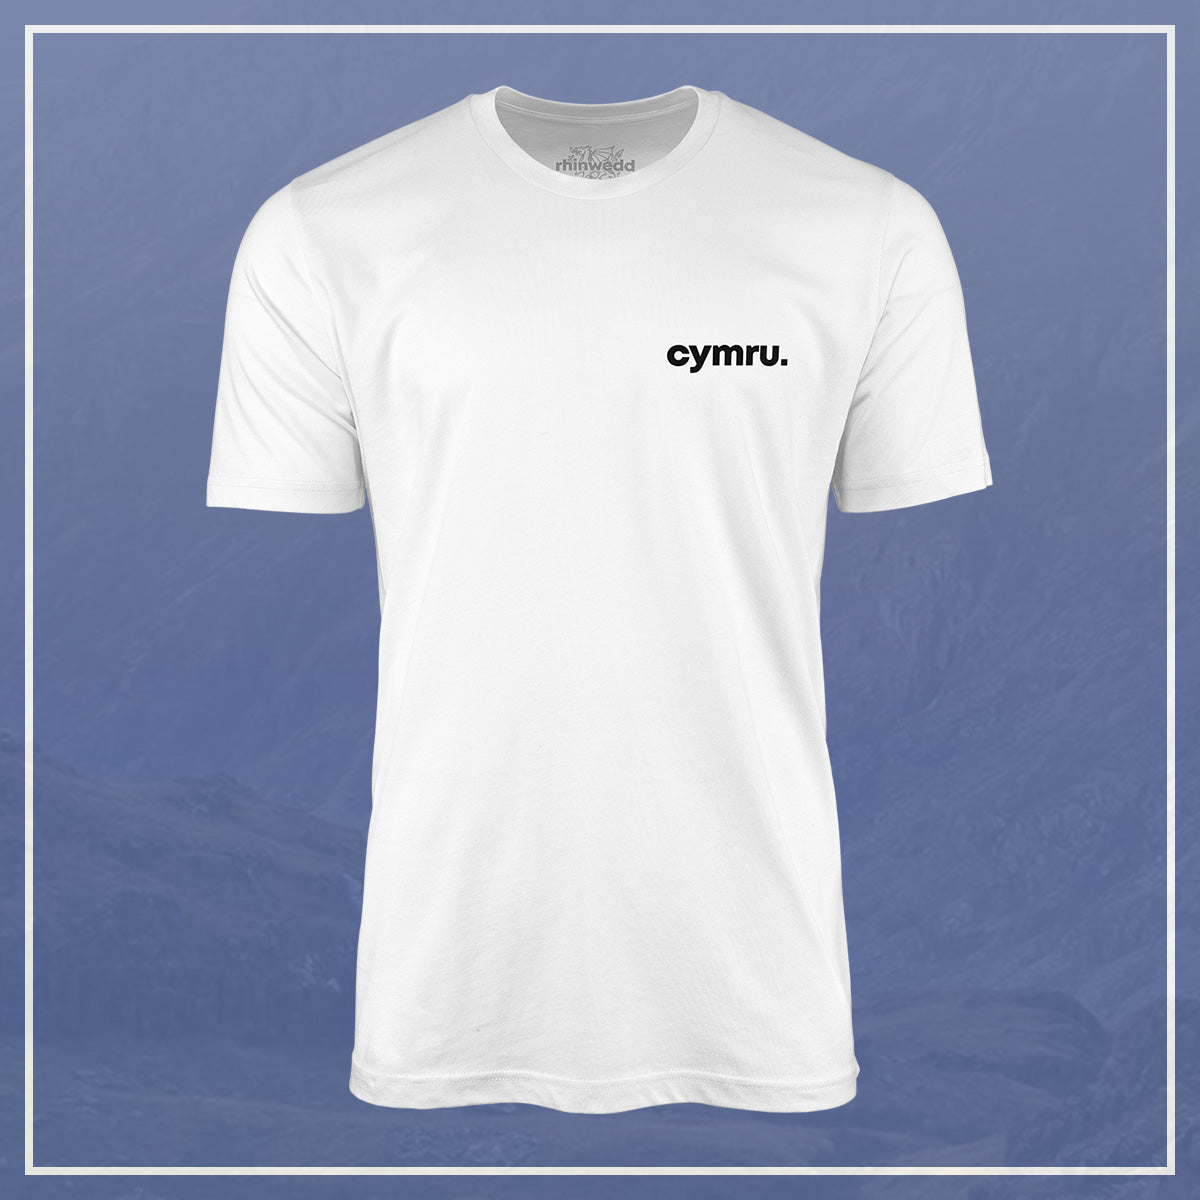 Cymru T-Shirt - White